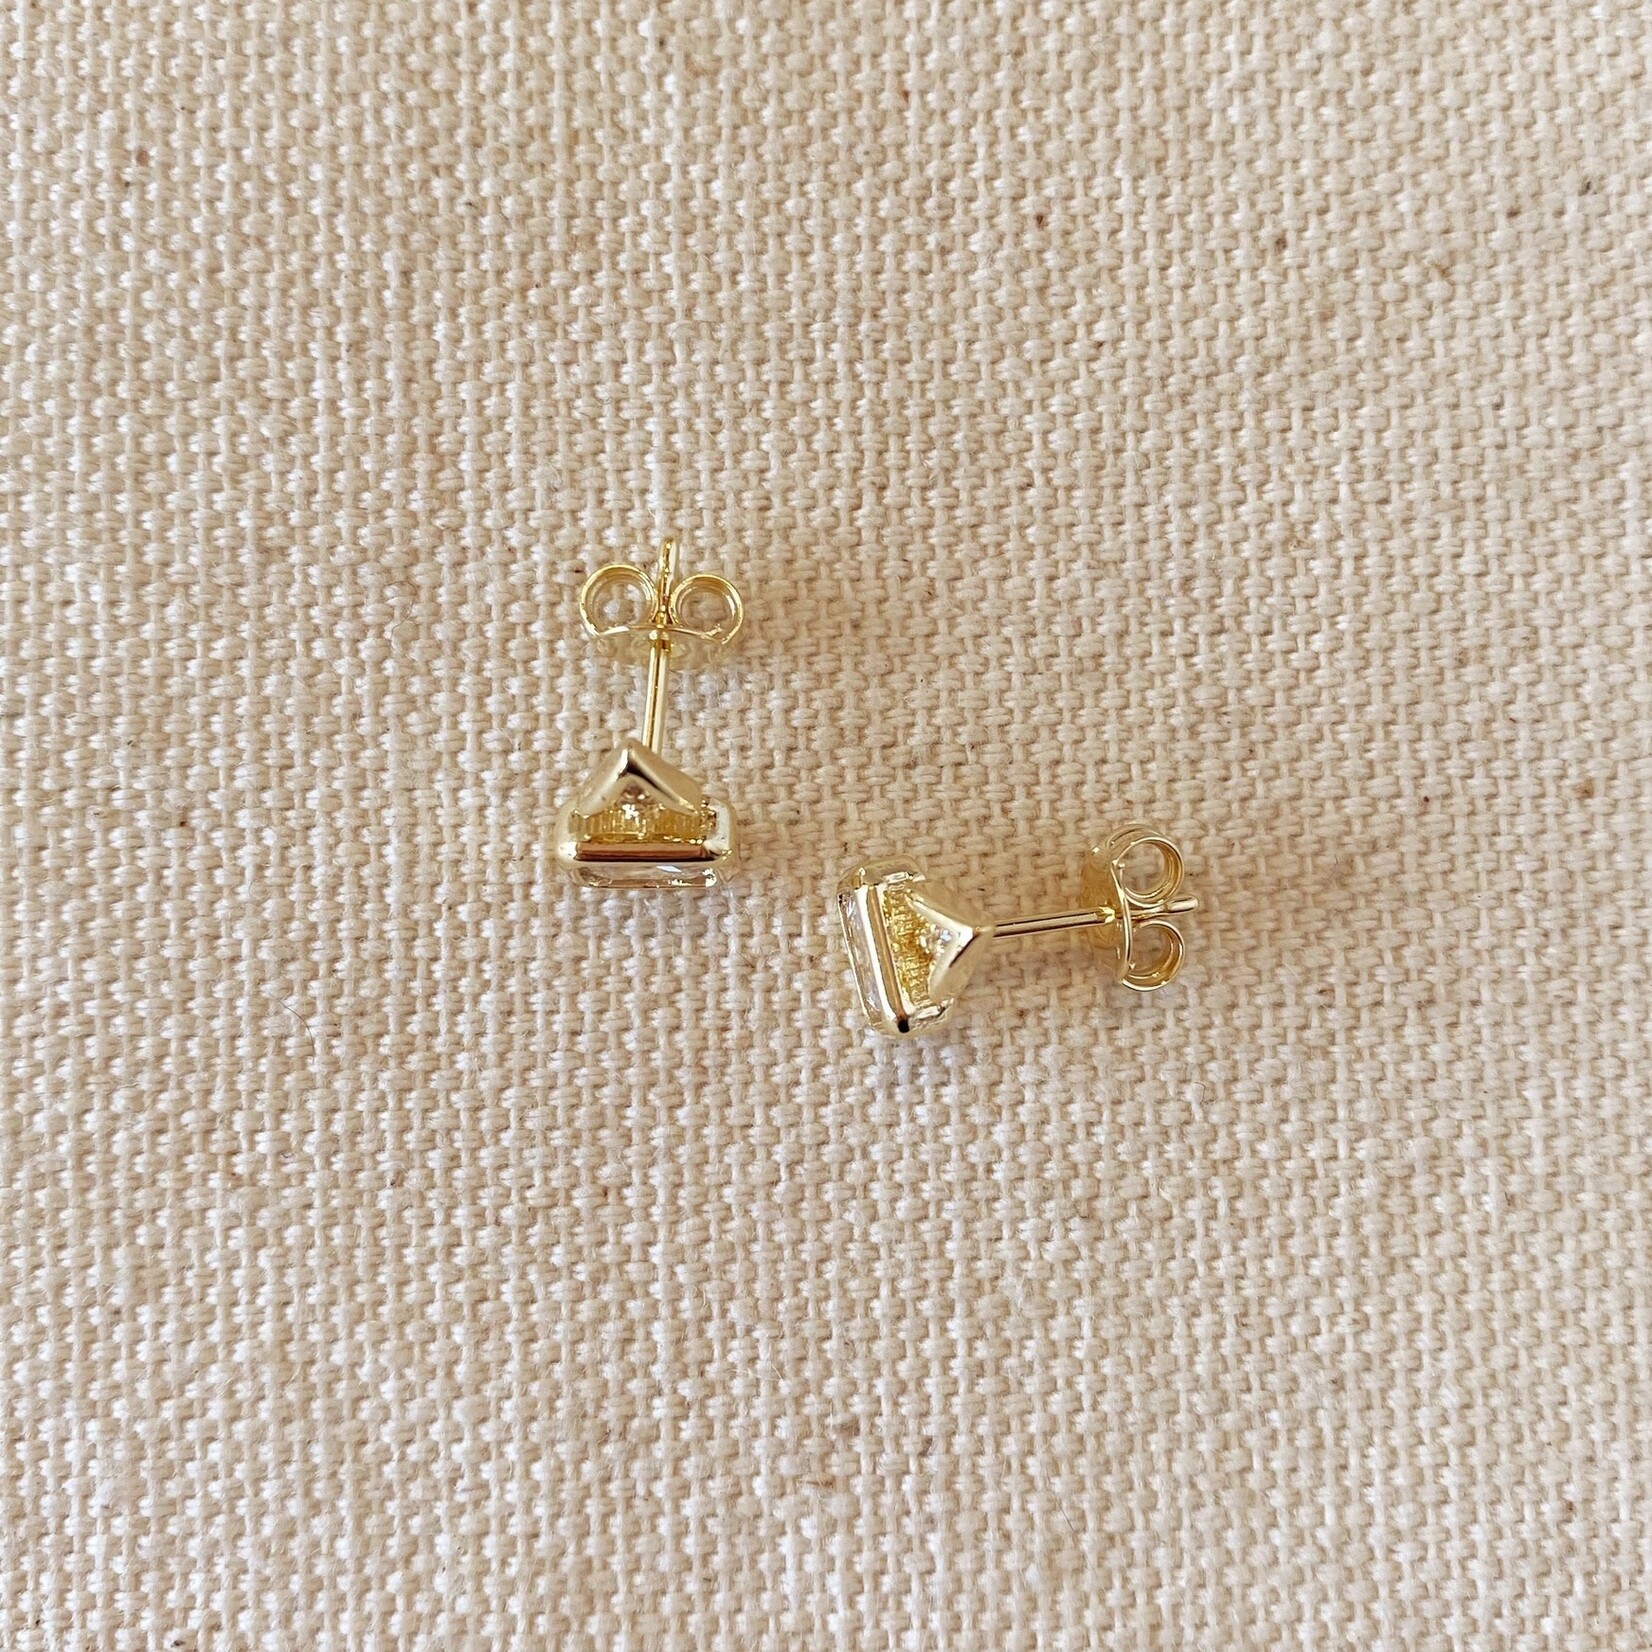 GoldFi 18k Gold Filled Geometric Stud Earrings